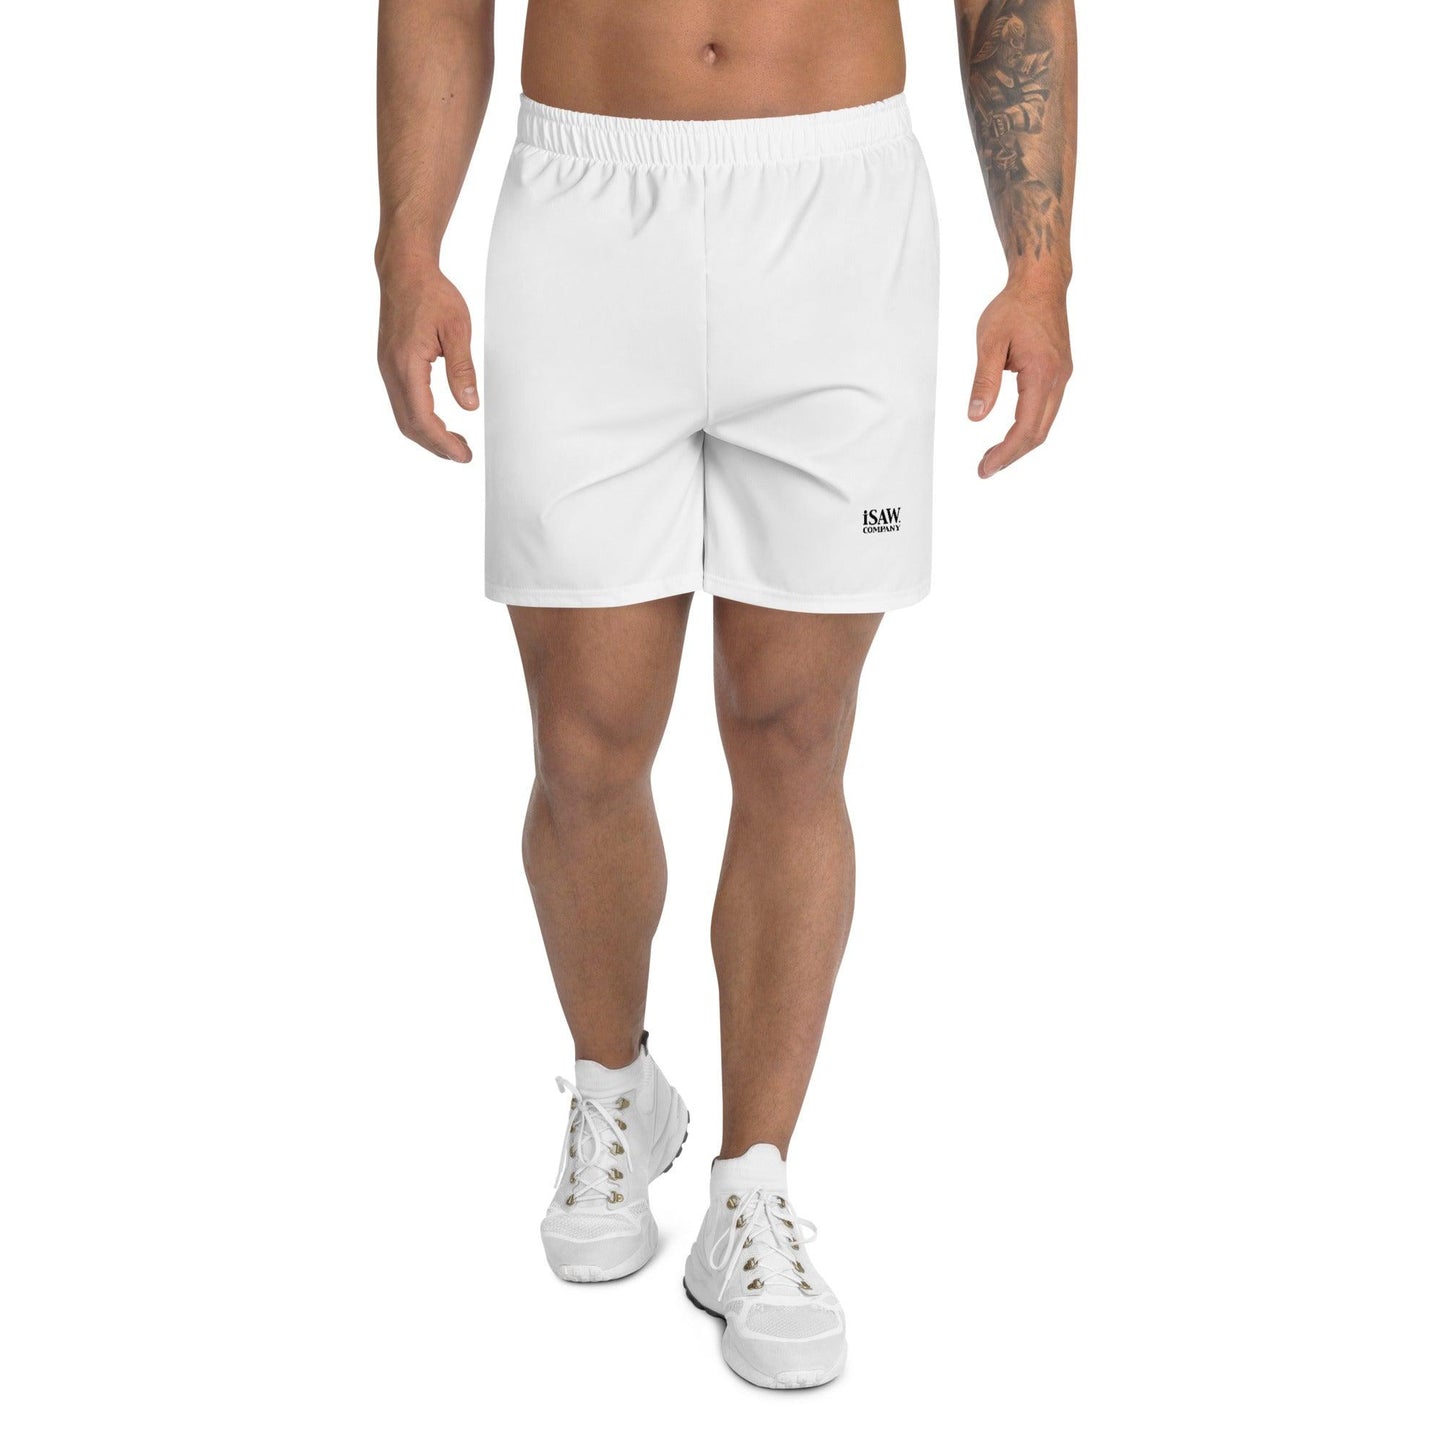 iSAW Mens White Athletic Shorts - iSAW Company